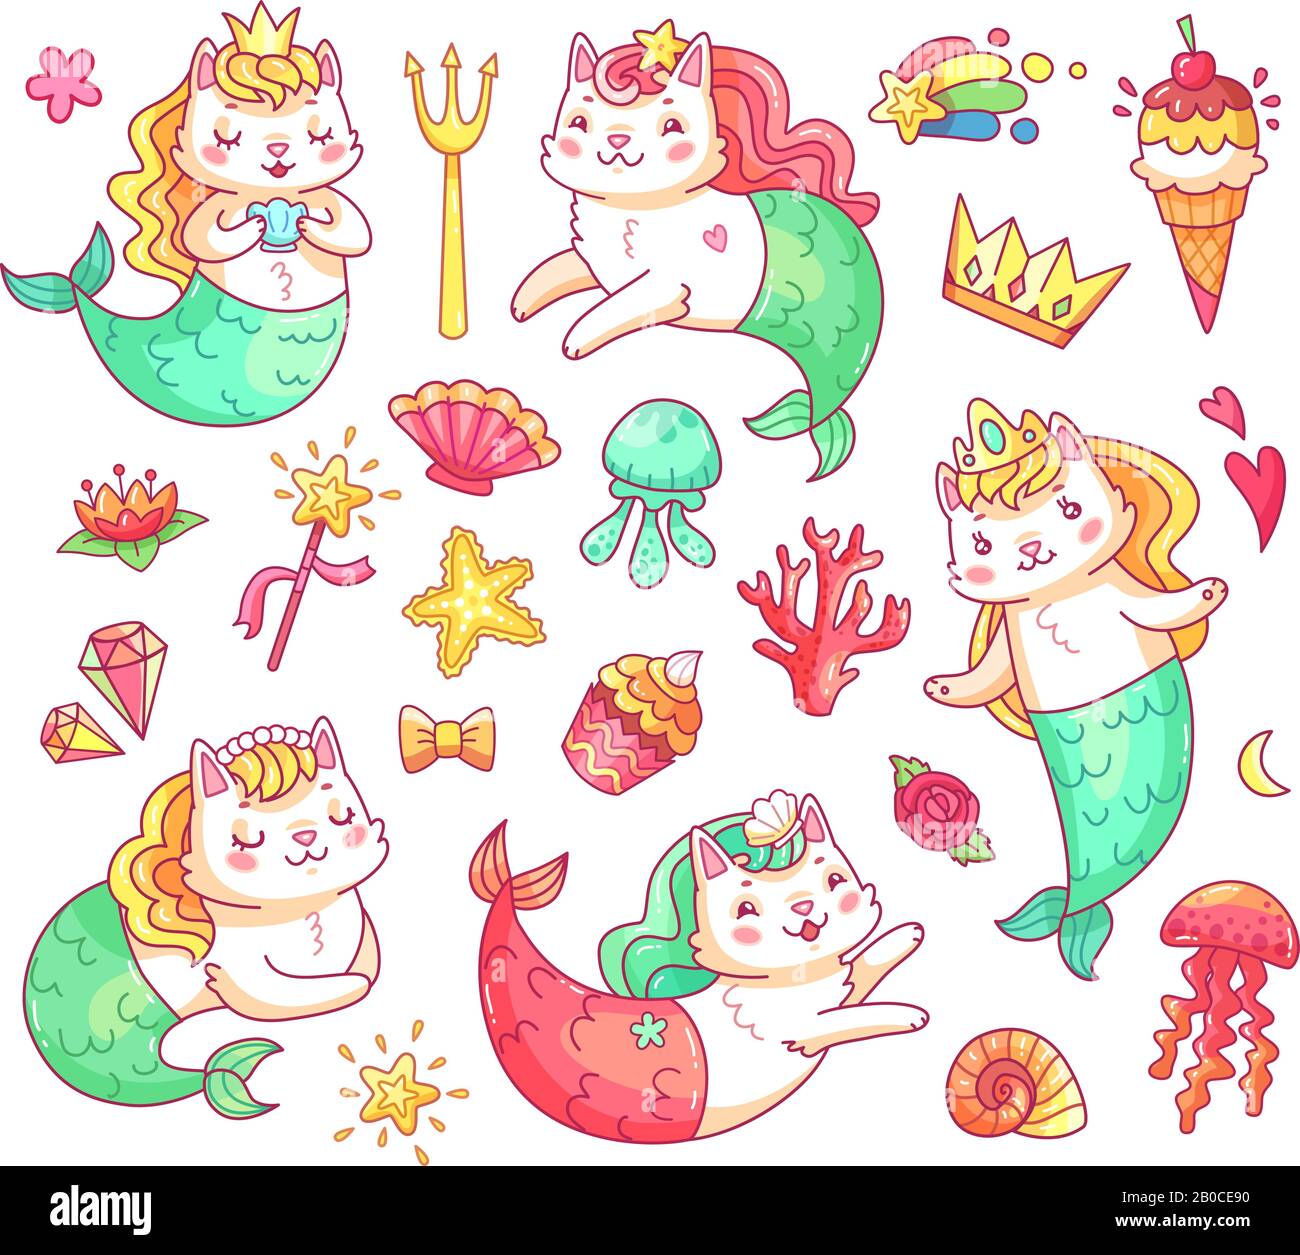 Mermaid kitty cat cartoon characters. Underwater cats mermaids vector set Stock Vector